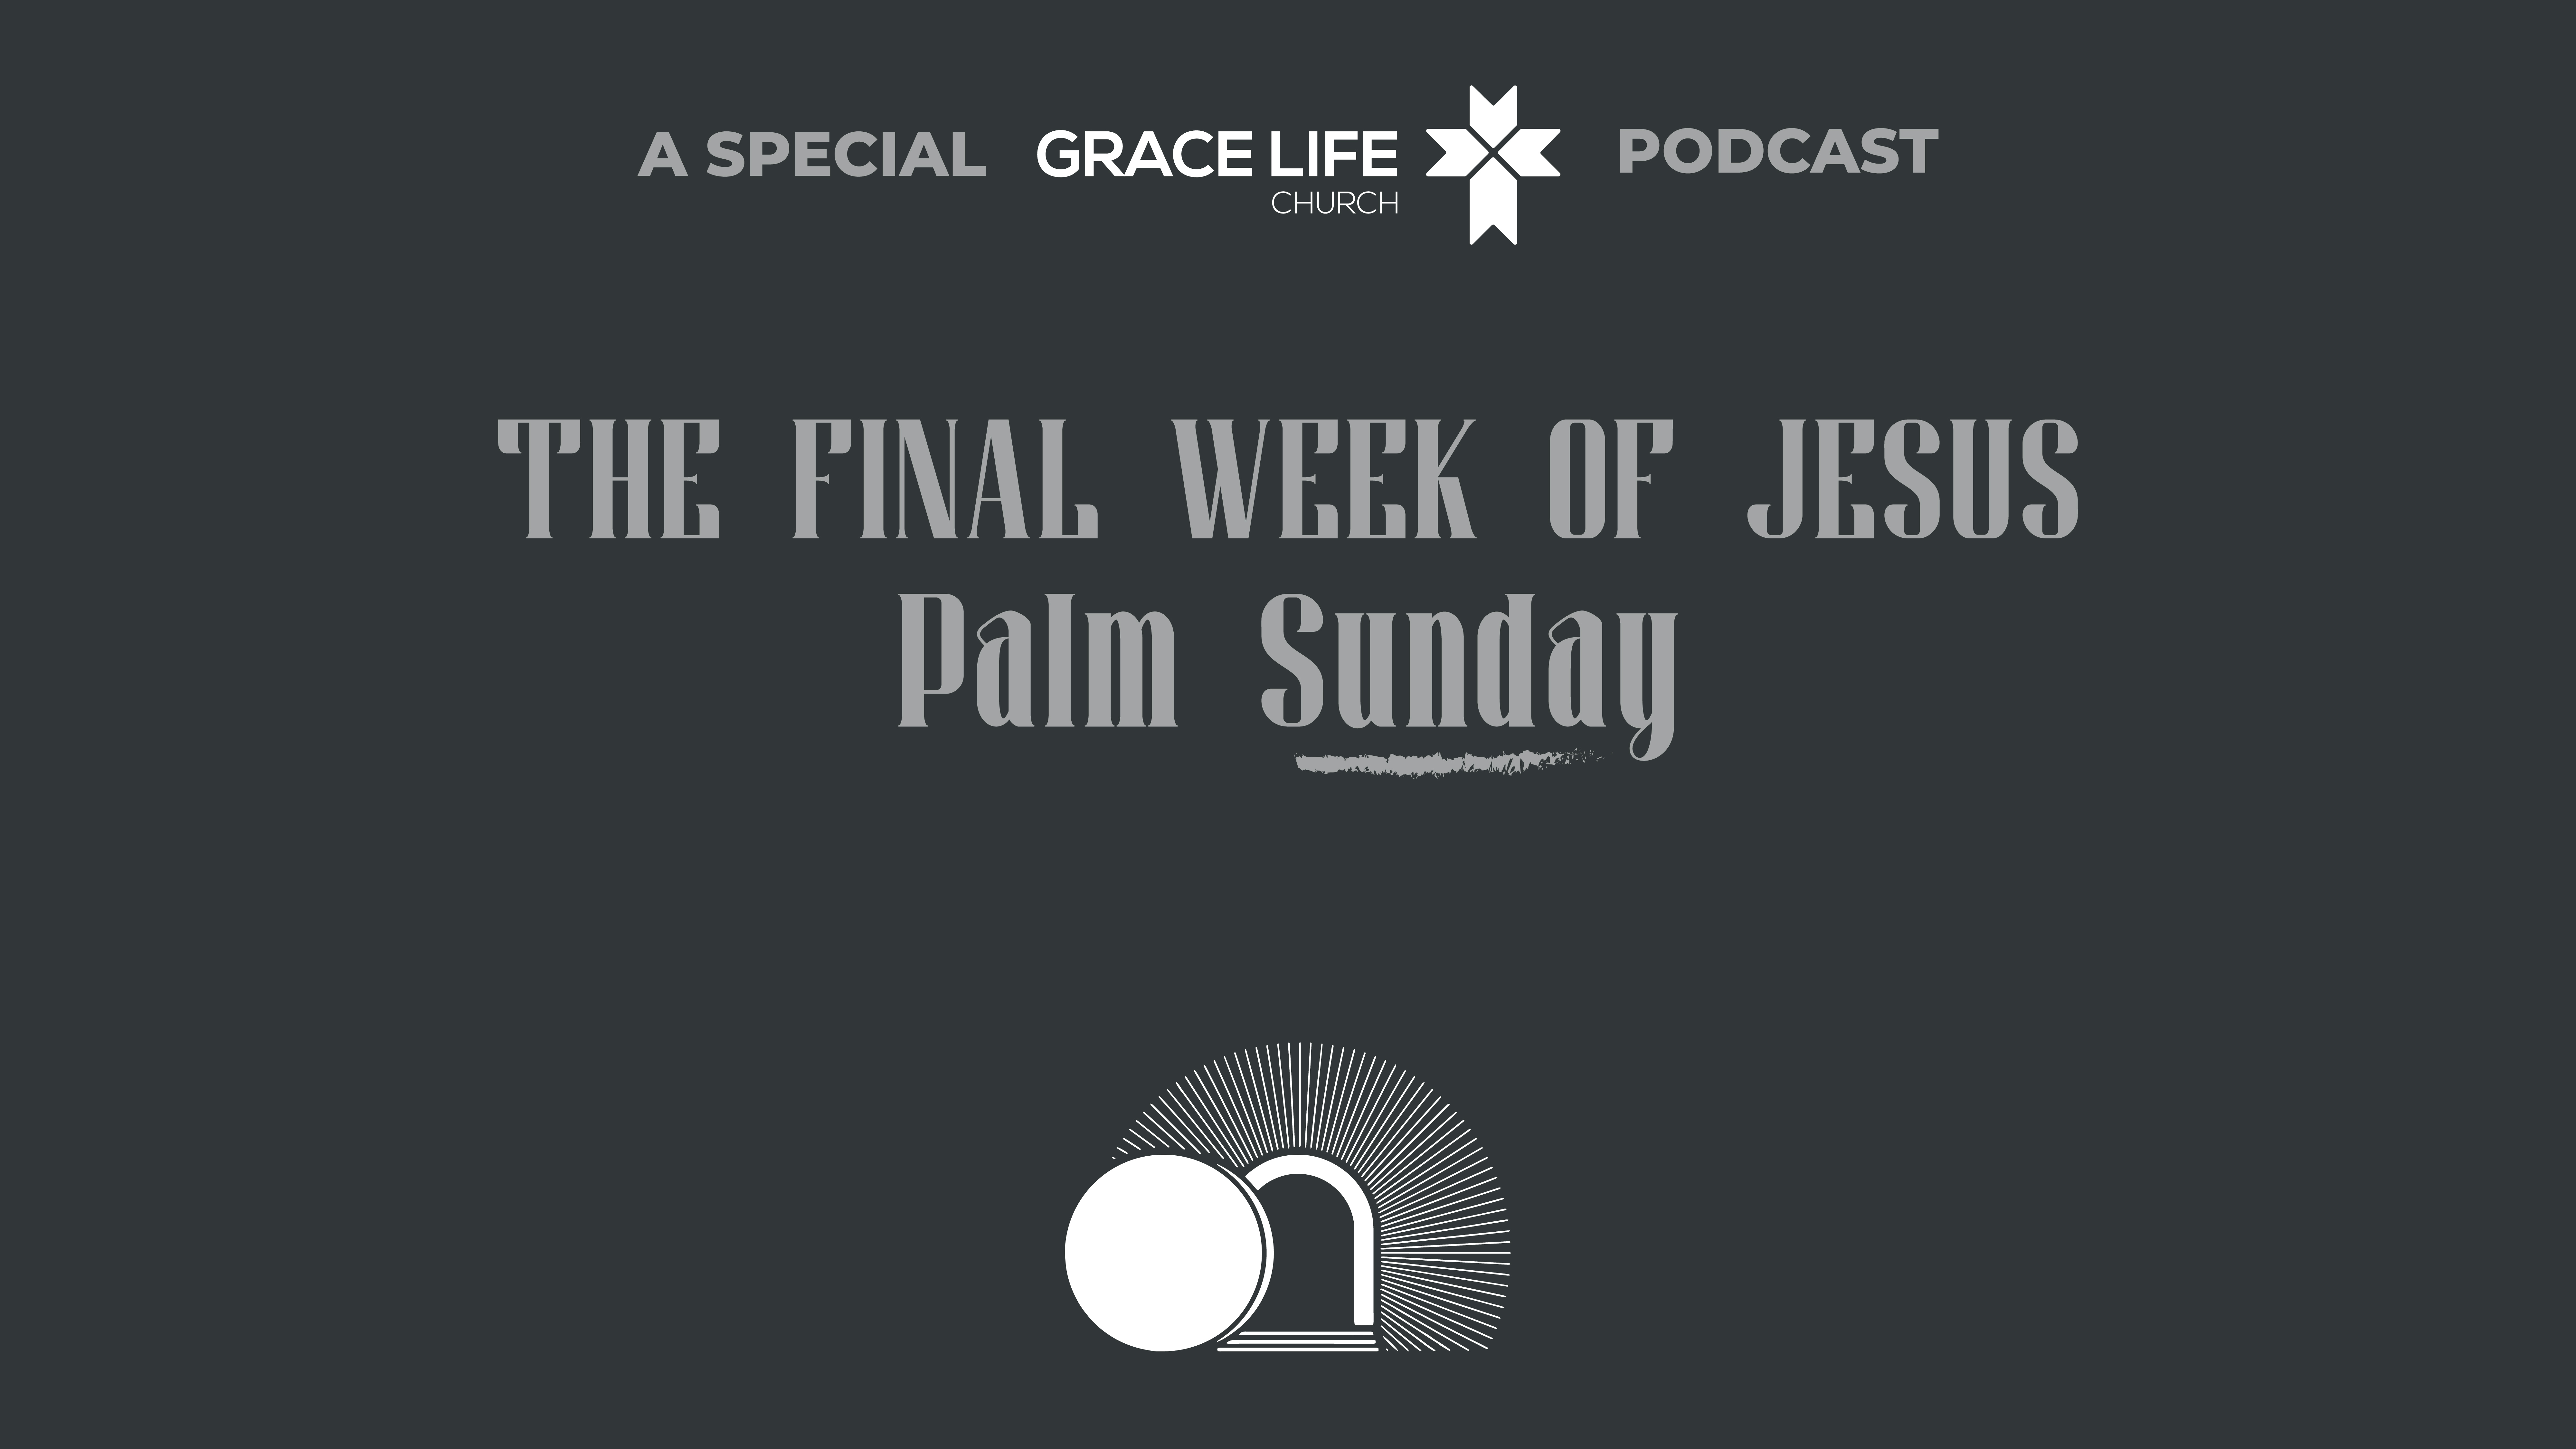 Palm Sunday: The Final Week of Jesus